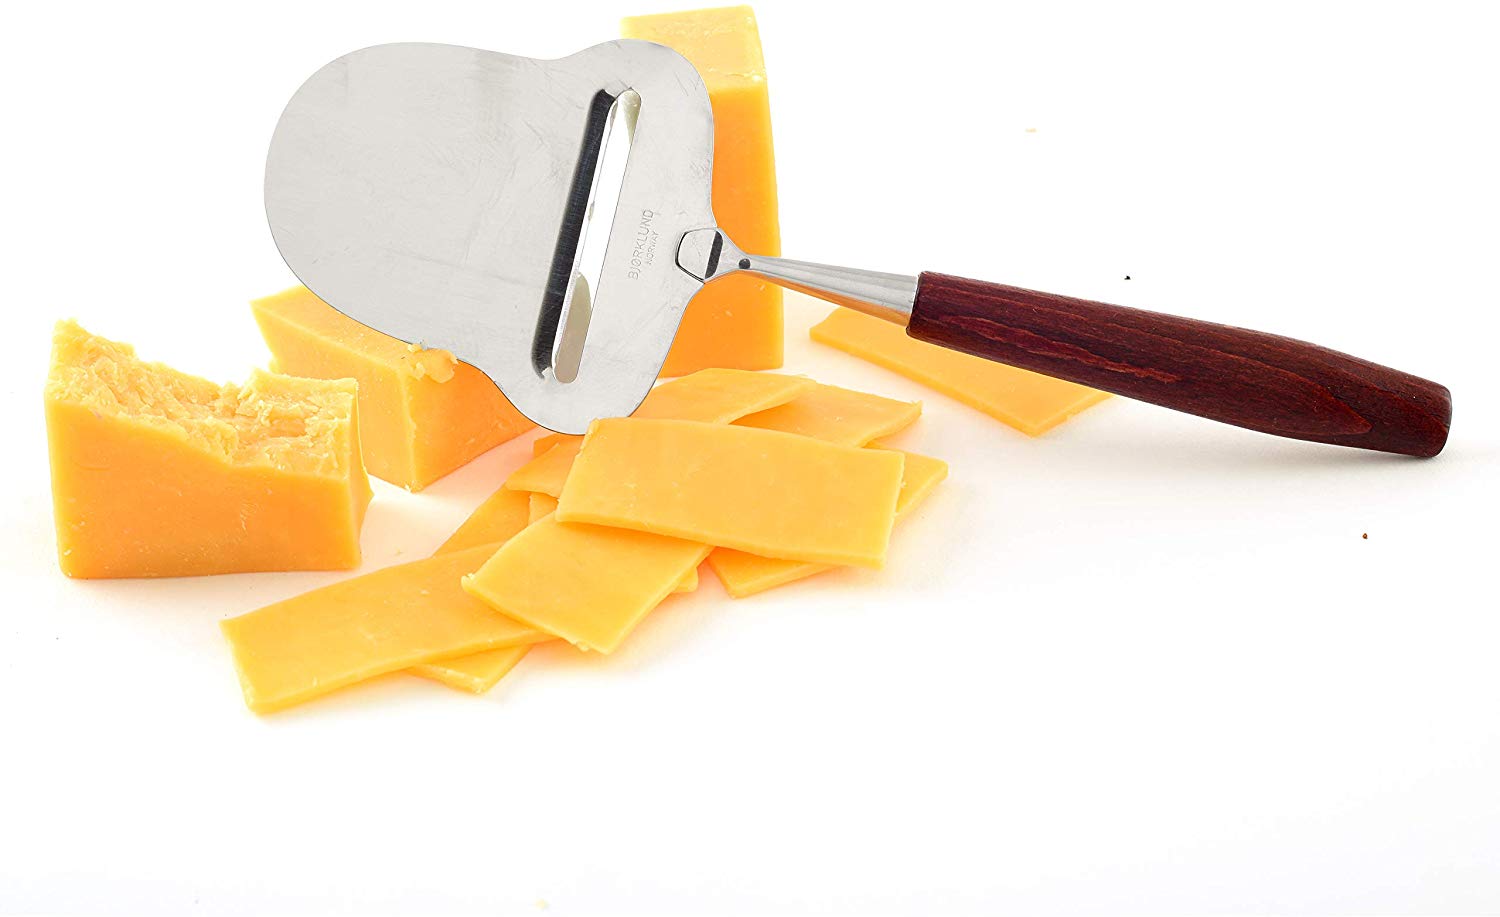 Norpro Cheese Slicer with Birch Handle